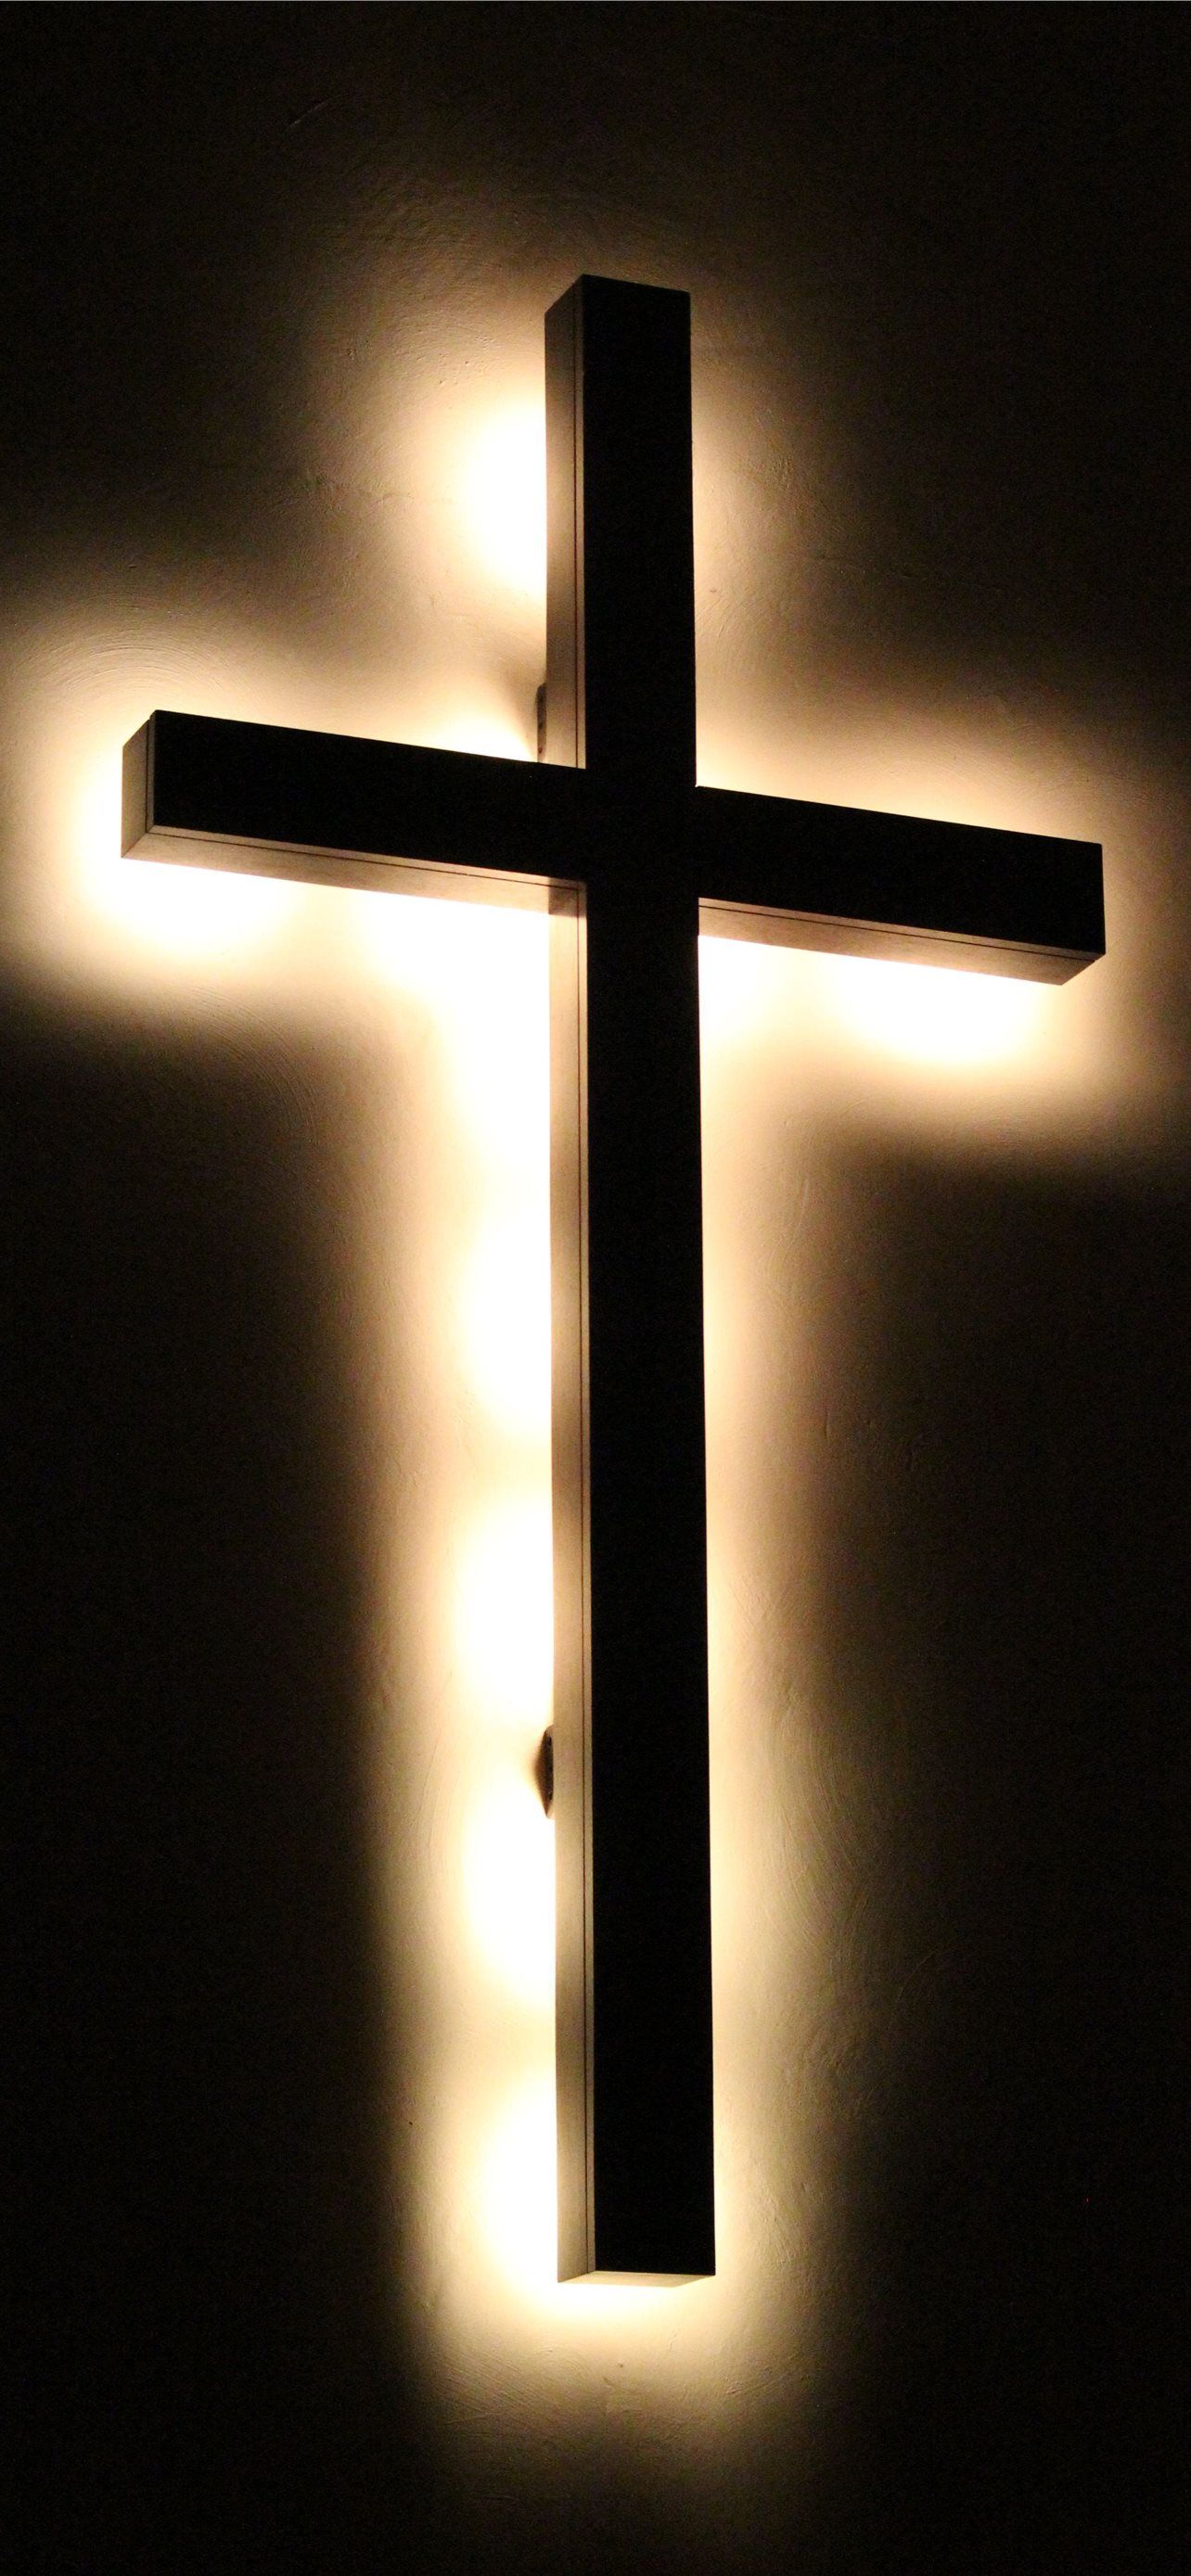 A wall cross with lights shining on it. - Cross